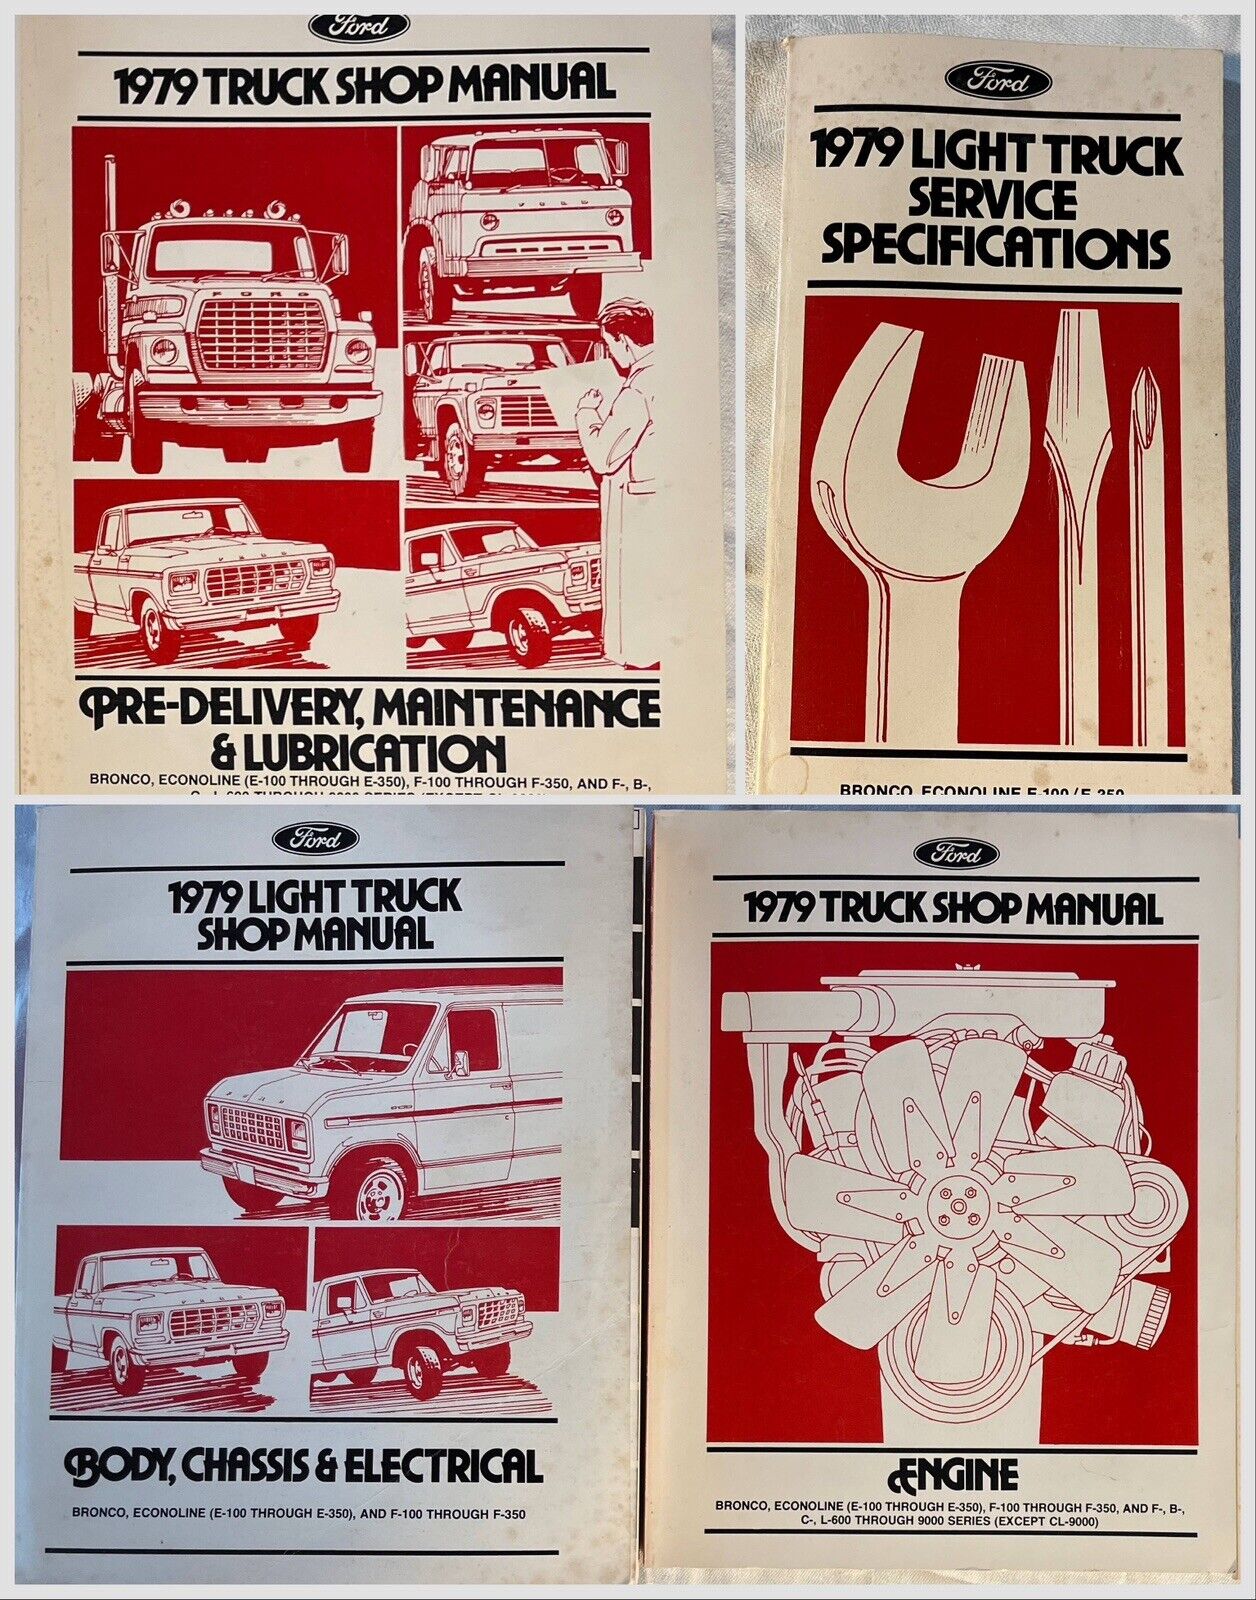 Original 1979 Ford Truck Shop Manual v I, II, III + Ford Truck Service Specs